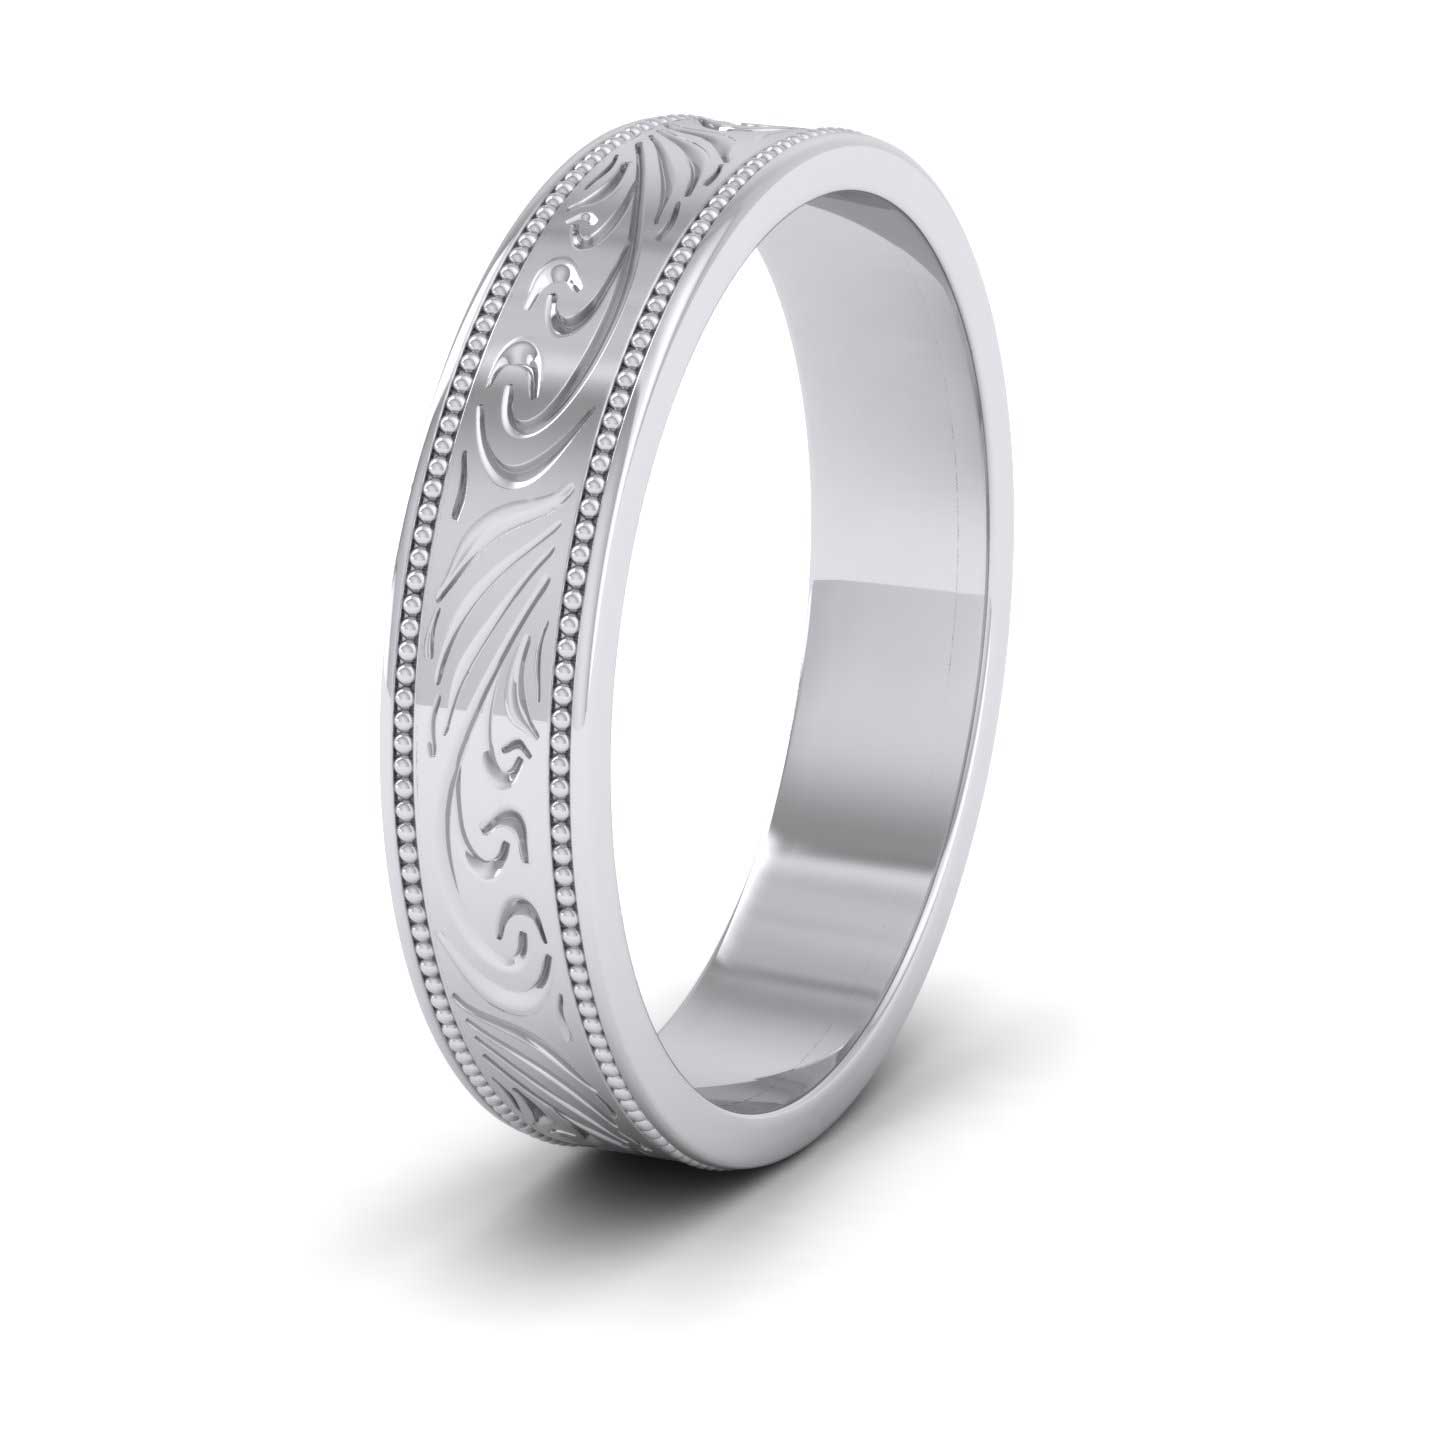 Engraved 950 Palladium 4mm Flat Wedding Ring With Millgrain Edge